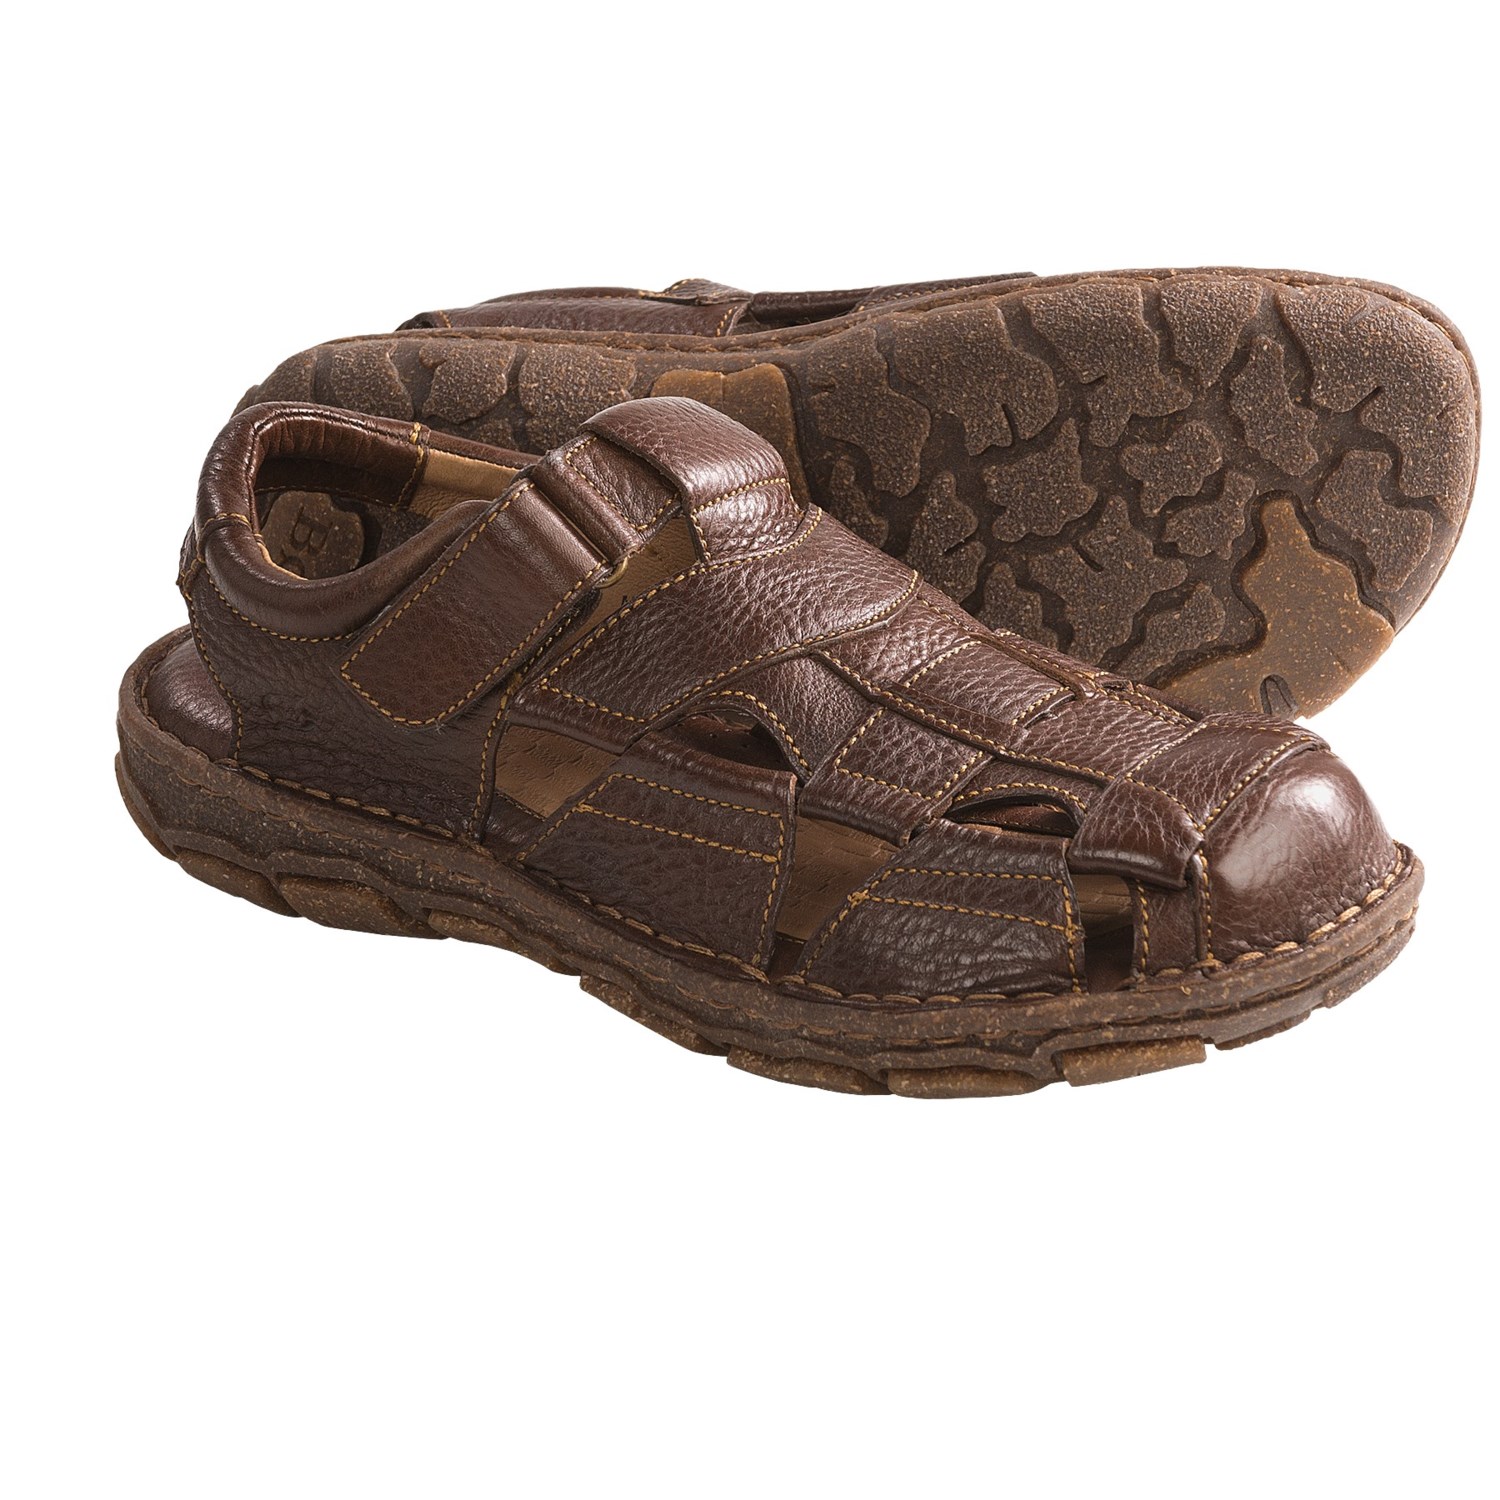 Born Woodward Sandals - Woven Leather (For Men) in Walnut Full Grain